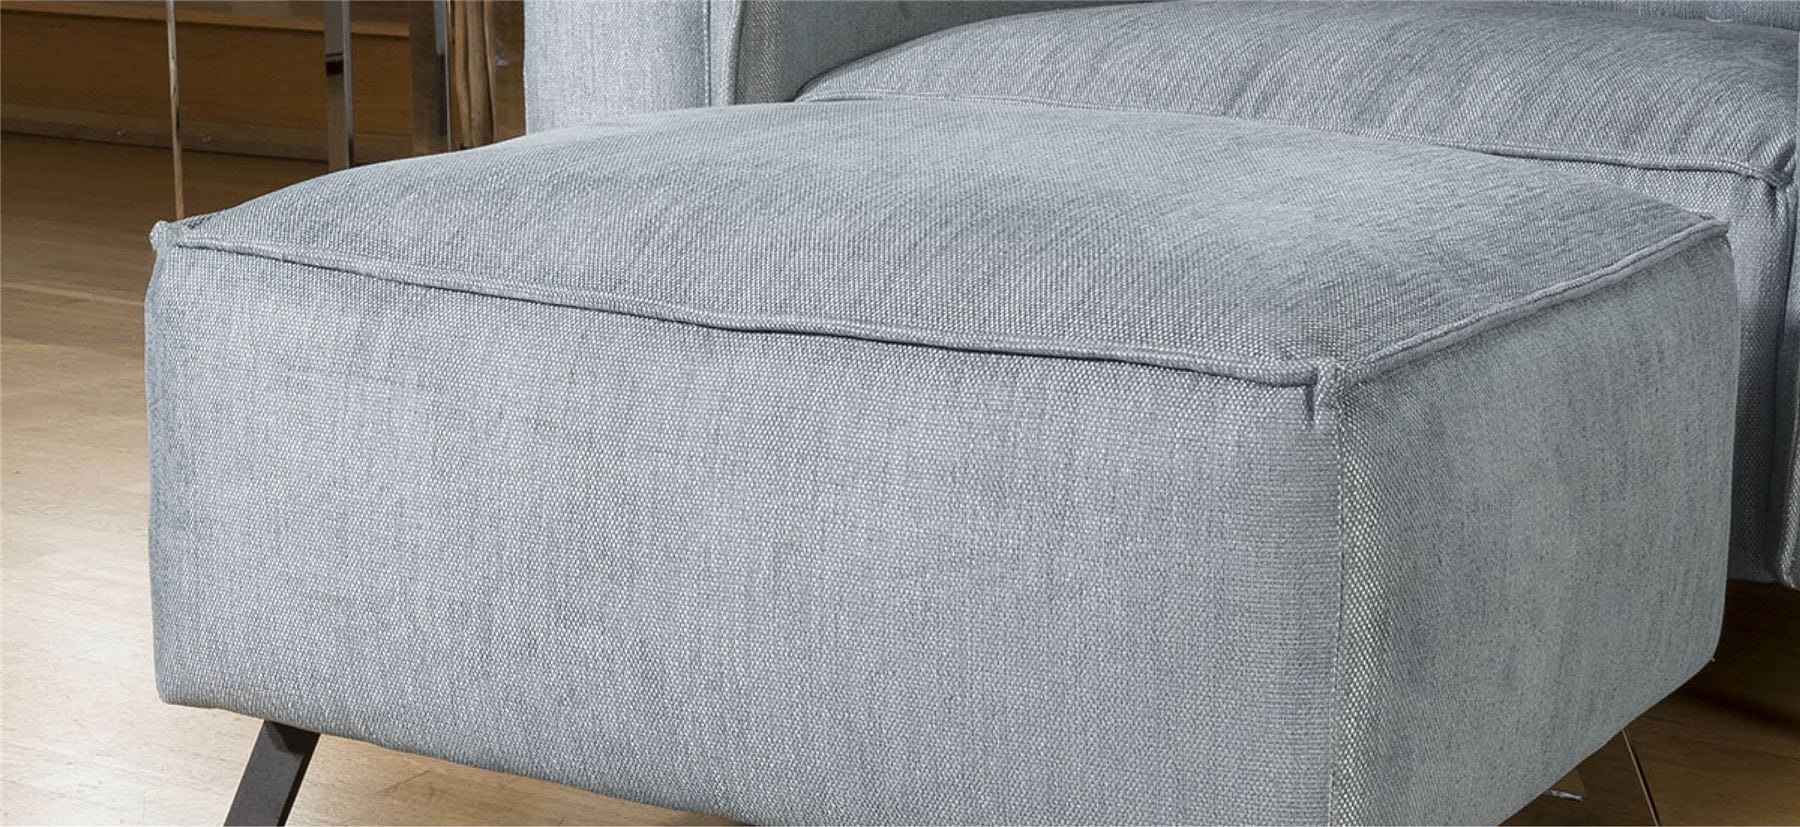 Quatropi Large Luxury Effie L Shaped Sofa with Chaise Many Fabrics 3.0 x 1.9m RH